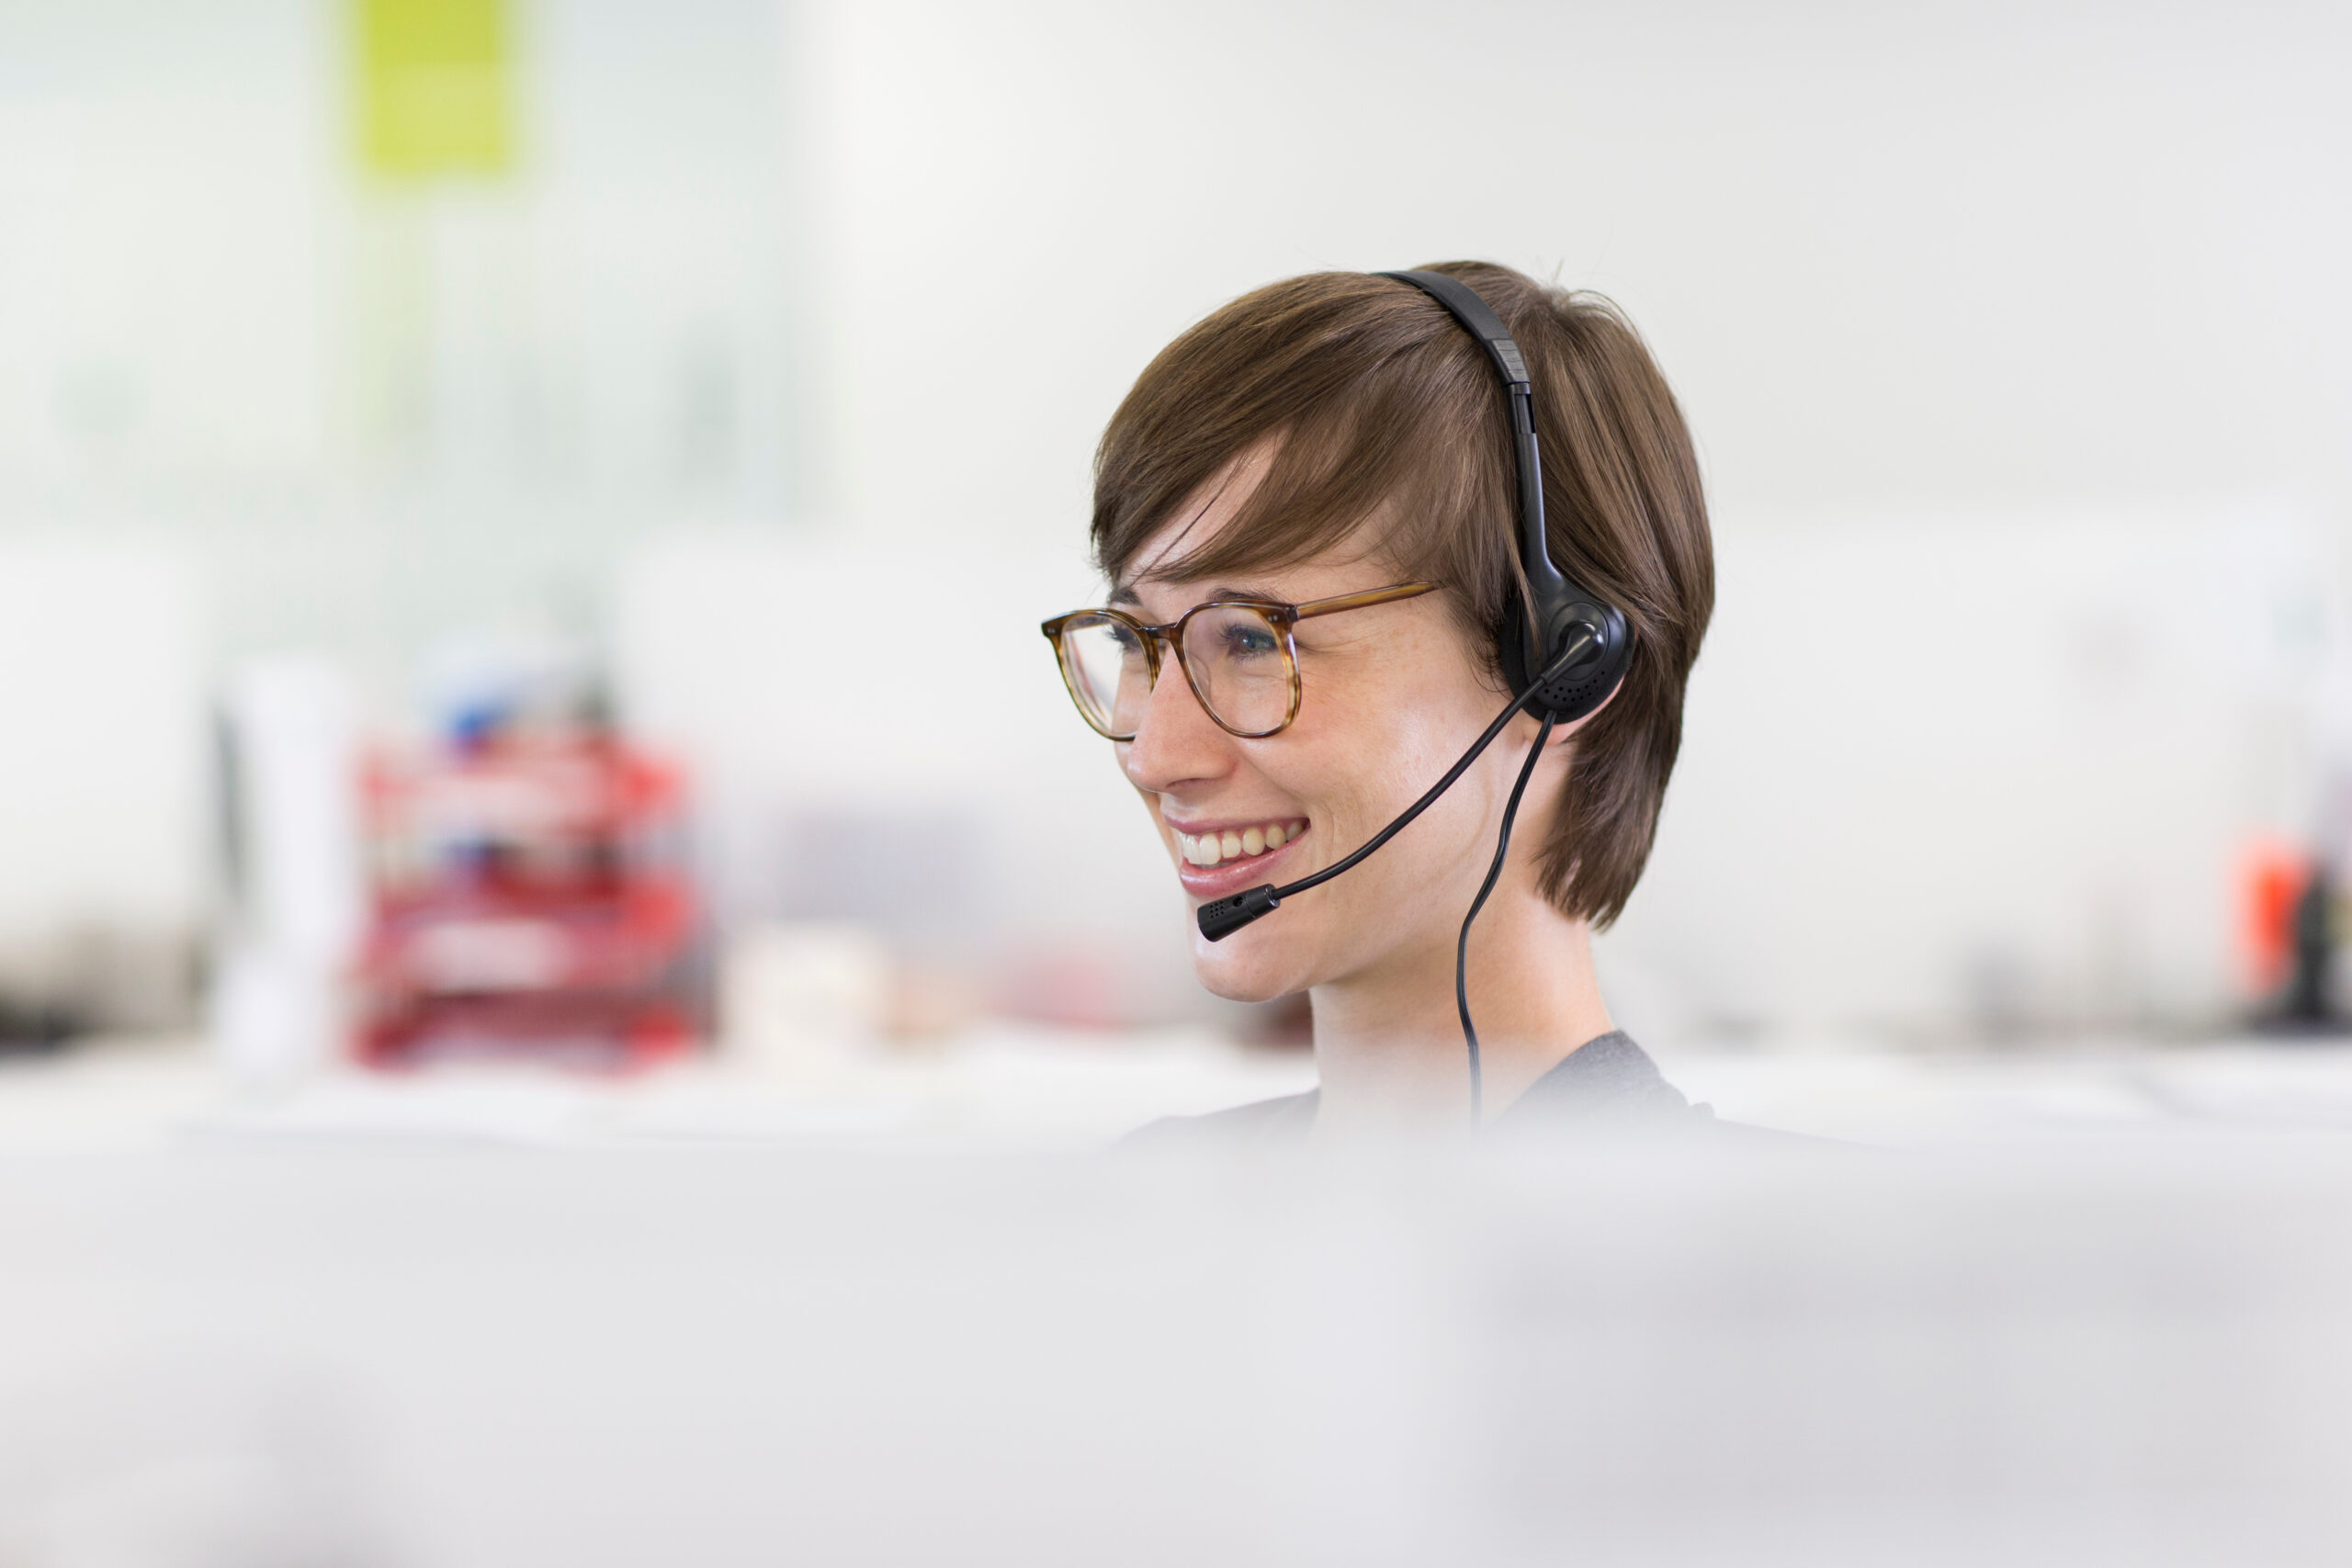 Smiling woman wearing headphones at work.